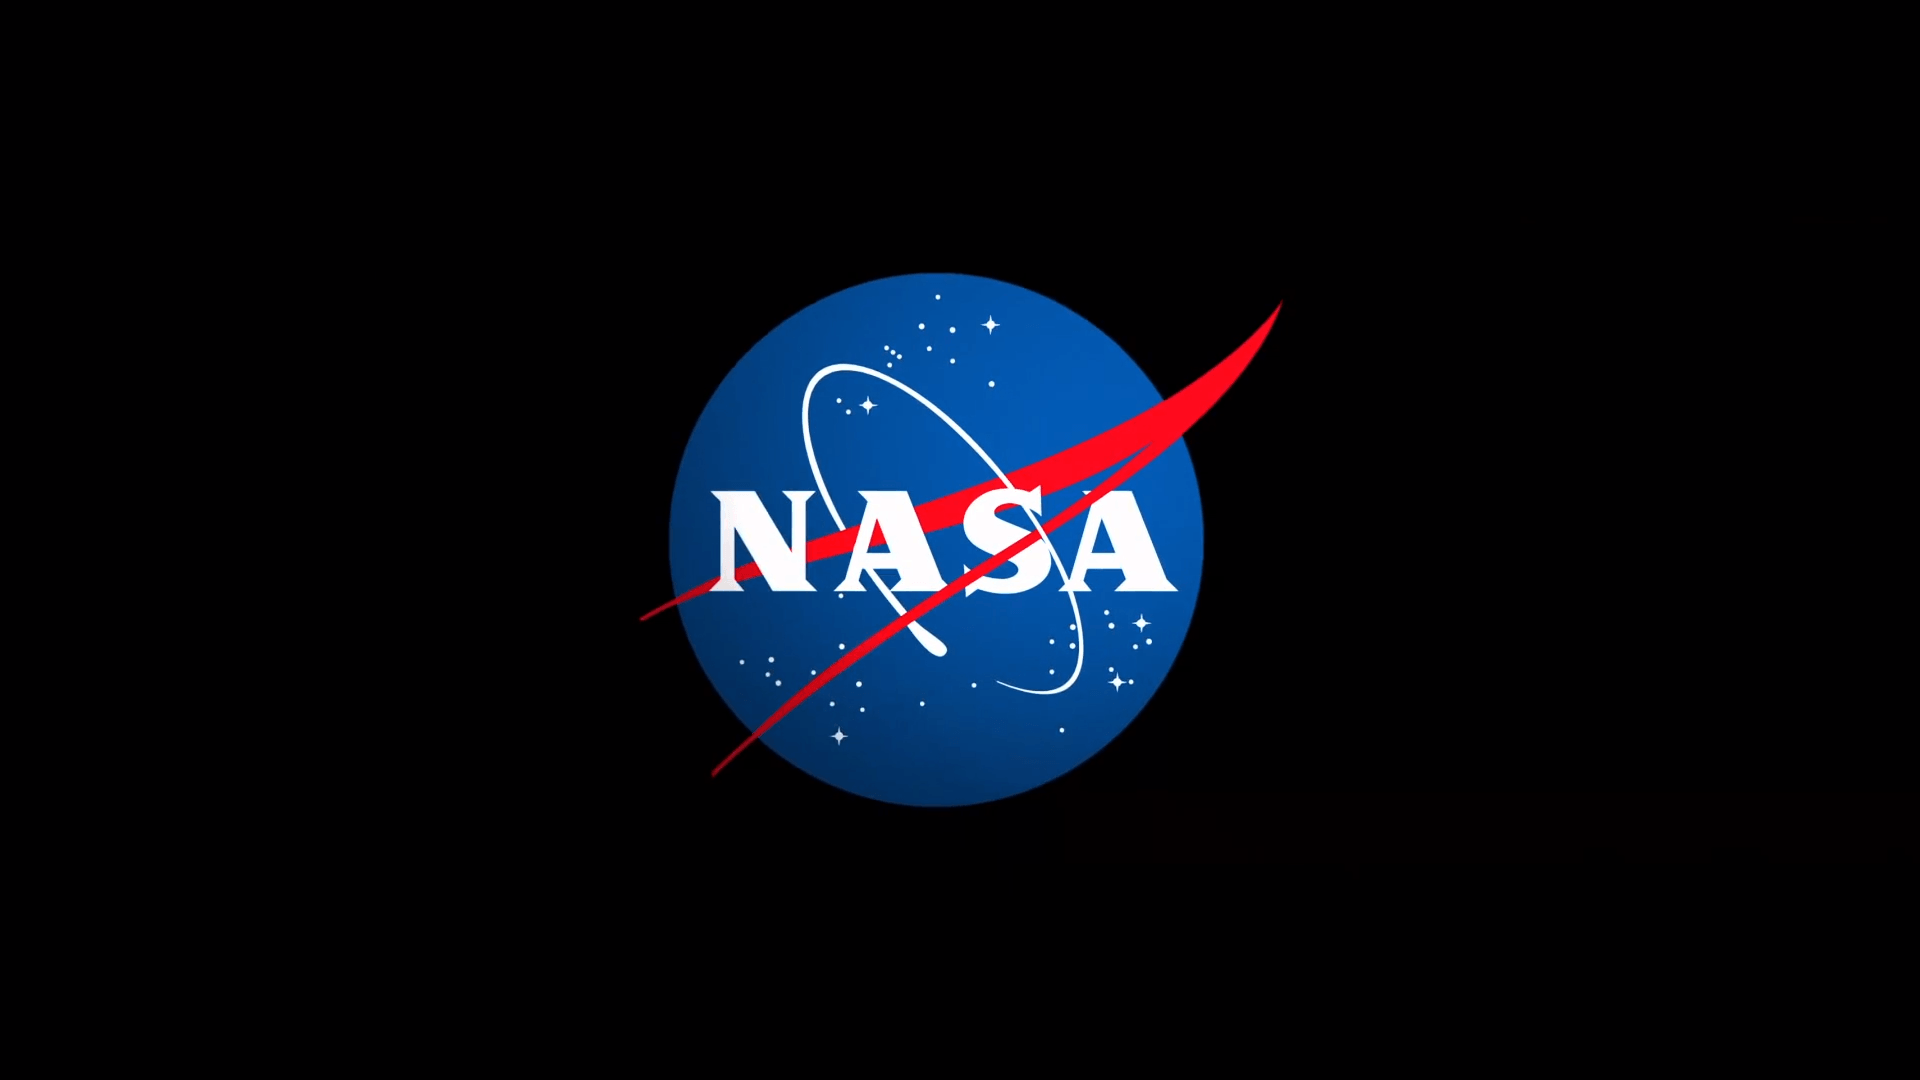 Nasa Meatball Logo, iPhone Wallpaper, Facebook Cover, Twitter